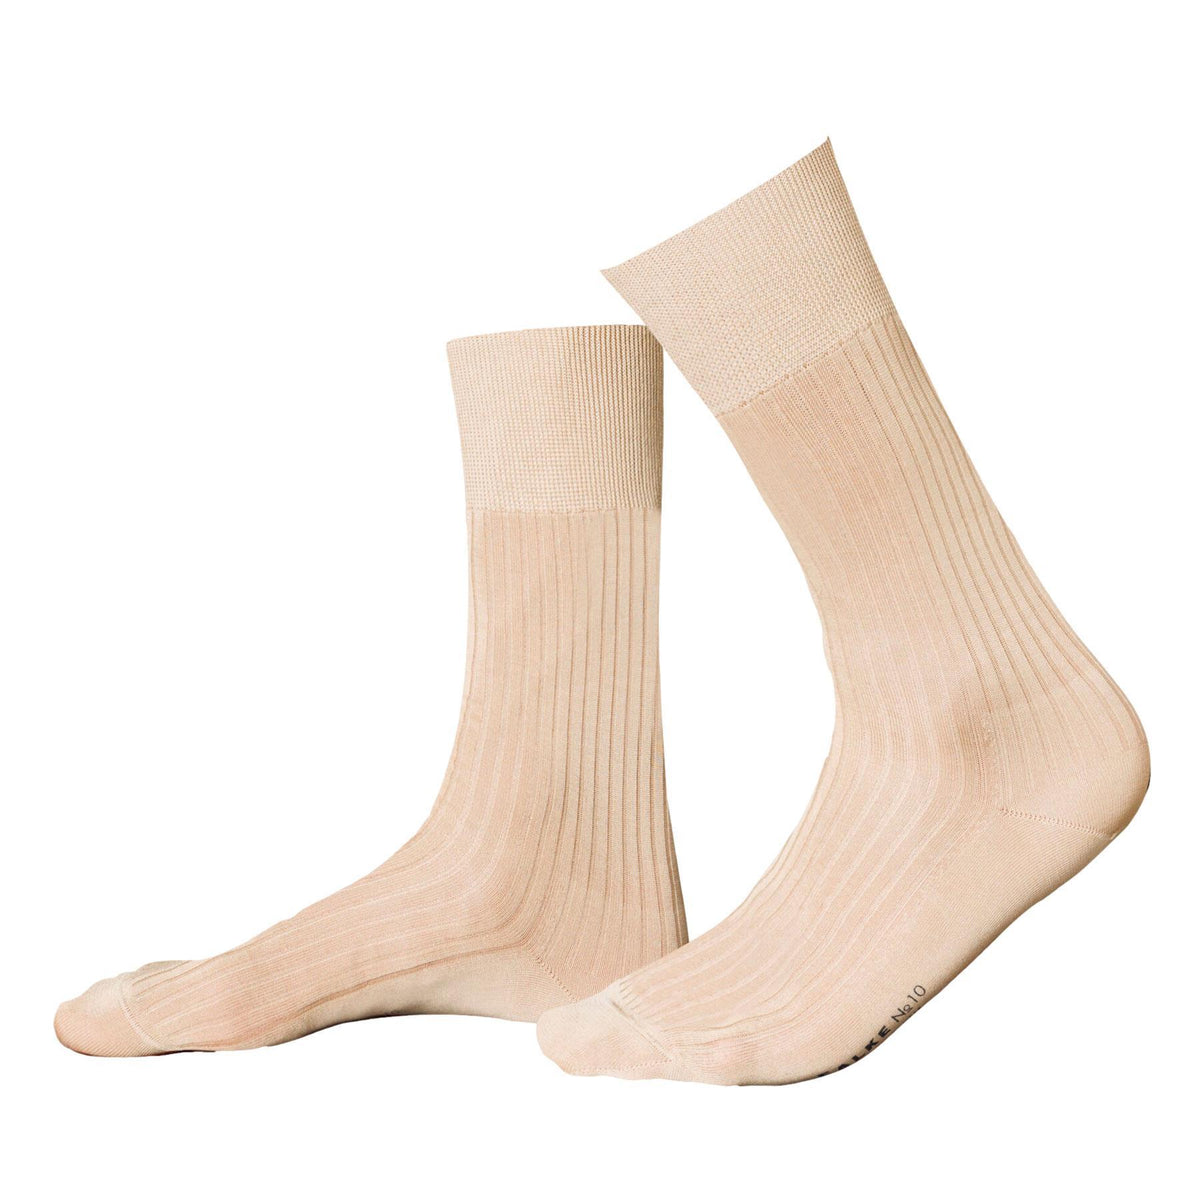 No 10 Egyptian Cotton Socks - Men's - Outlet